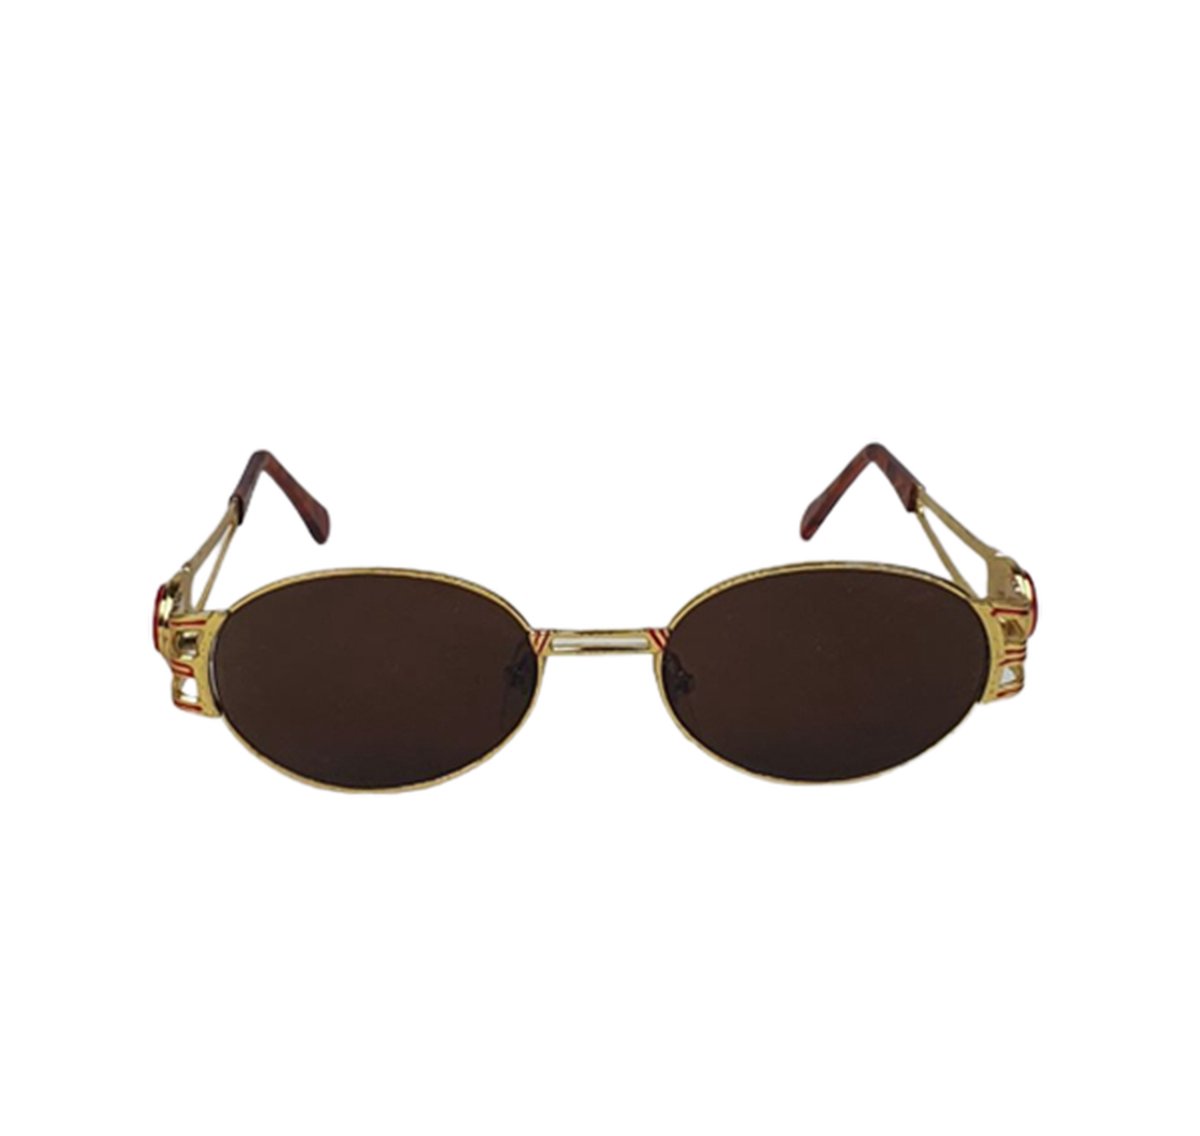 Zonnebril BRANDON - Luxe Bril met Rode Look - Bril - UV 400 - Goud / Rood - Ovaal - Shades - Unisex - John Lennon